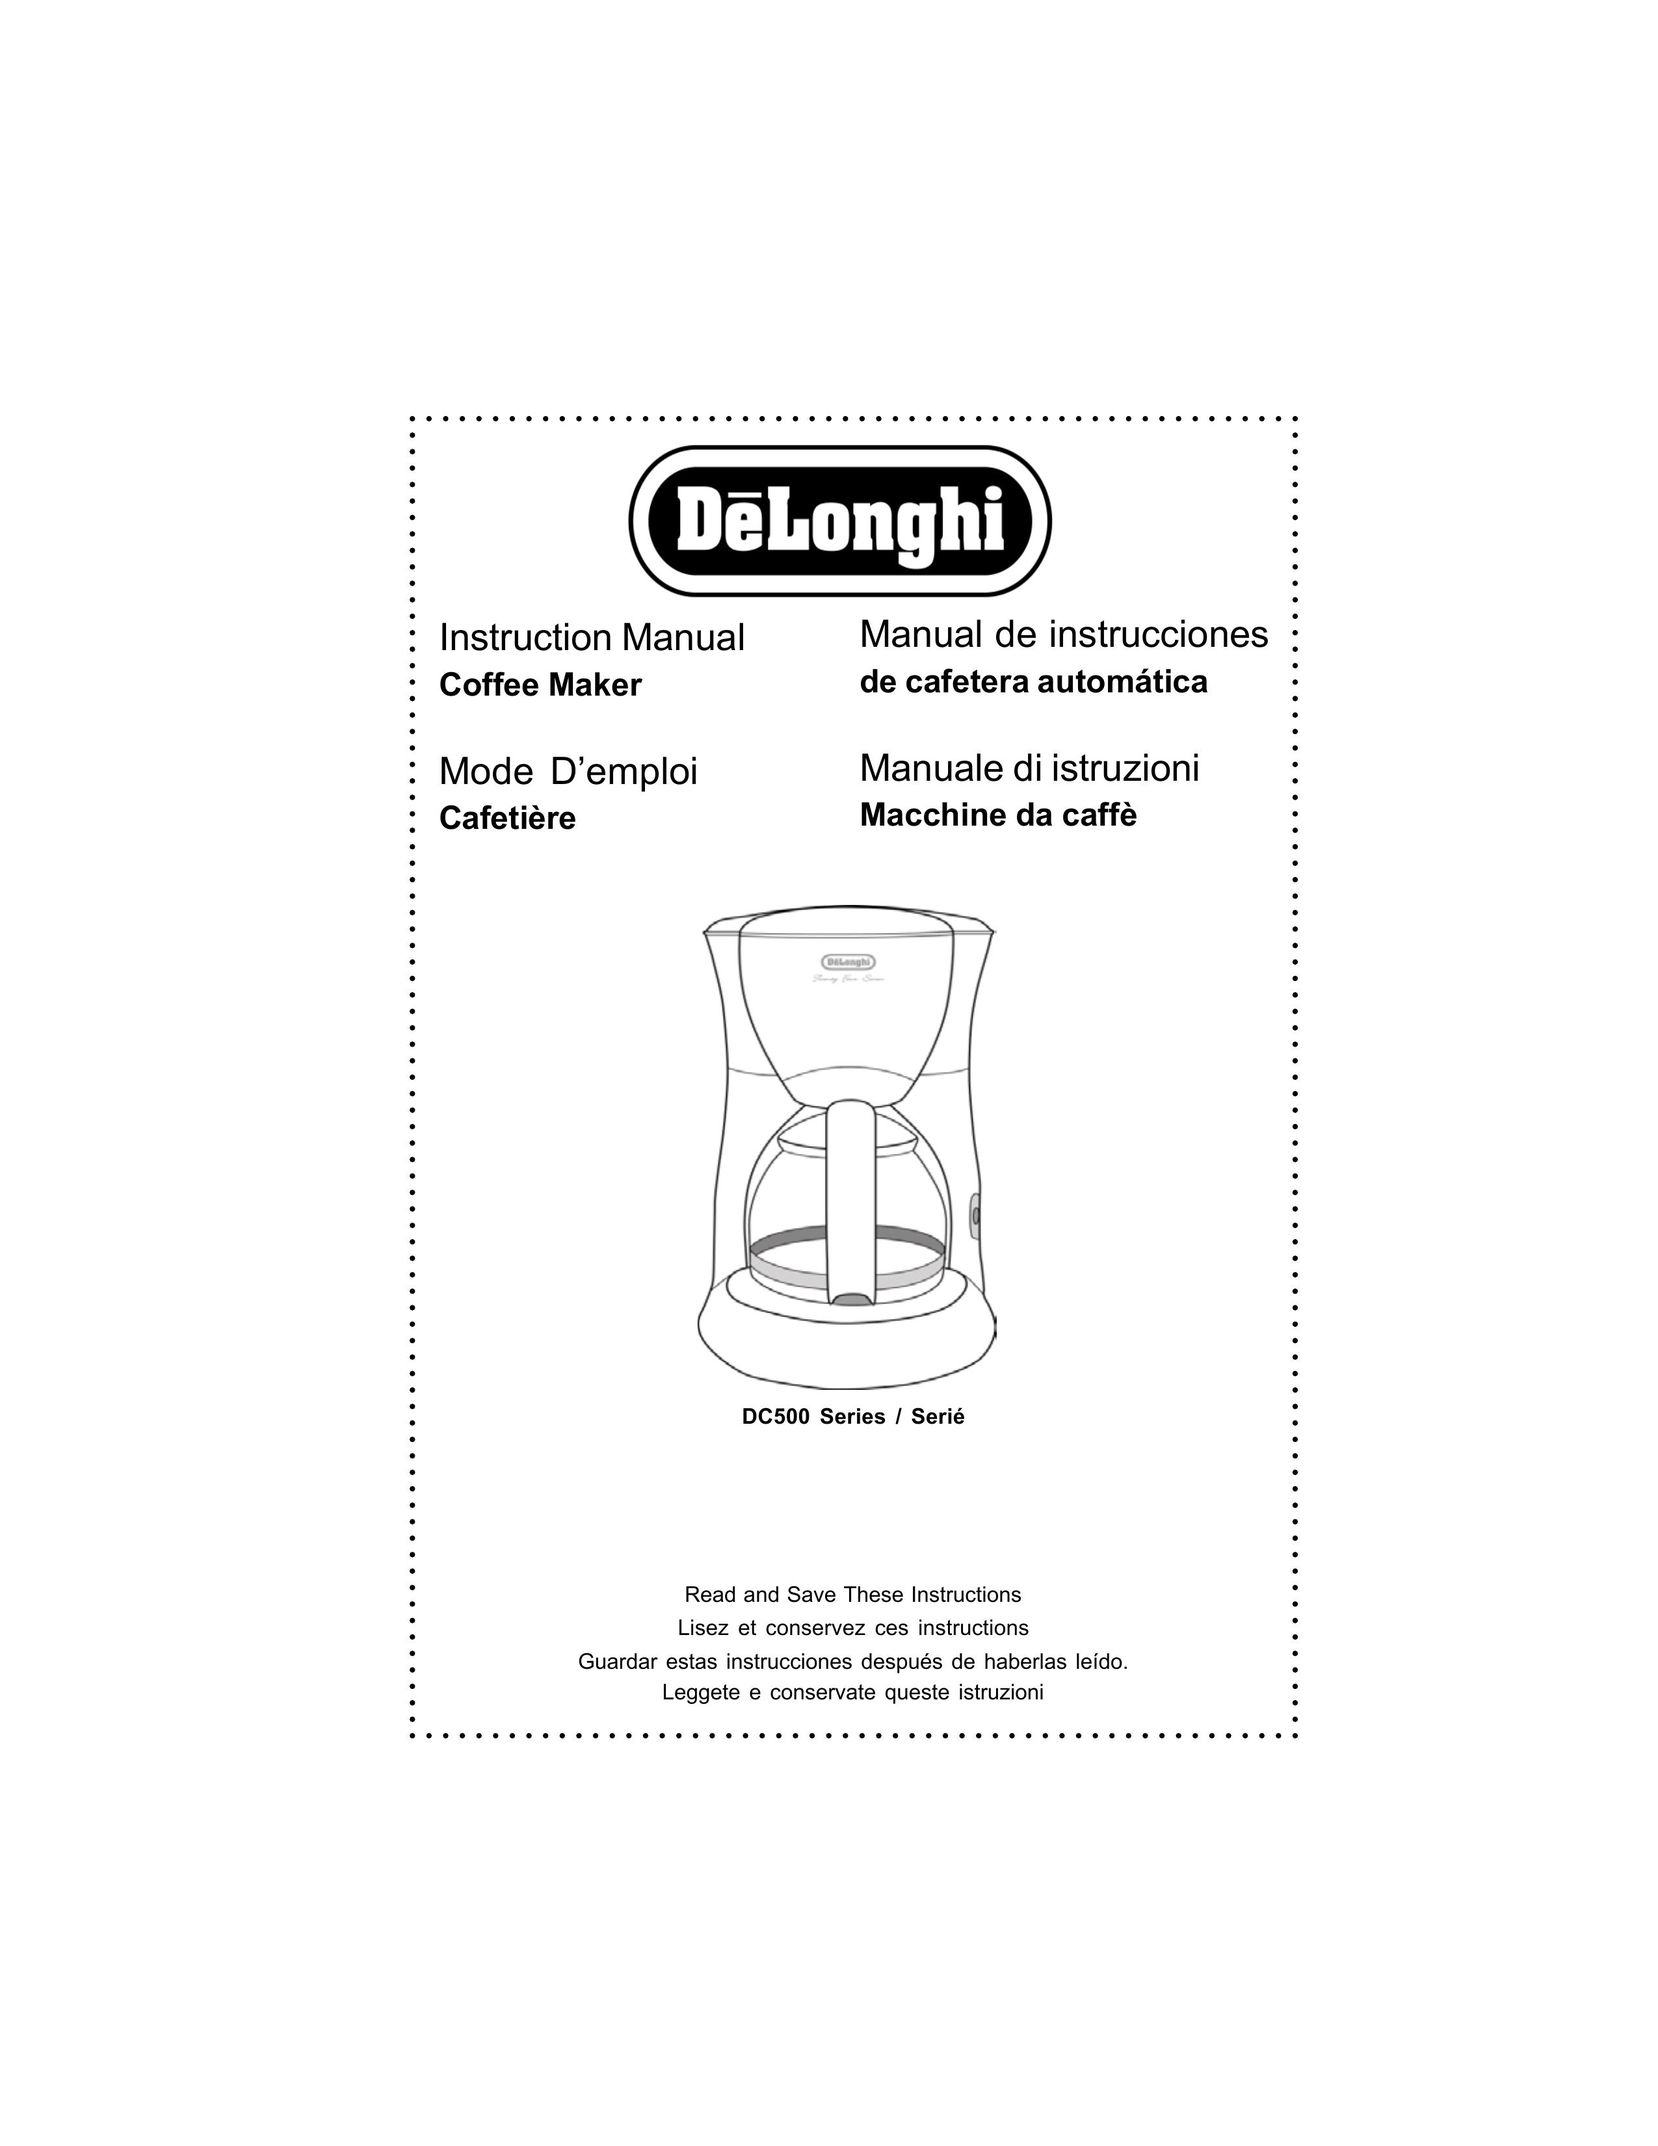 DeLonghi DC500 Coffeemaker User Manual